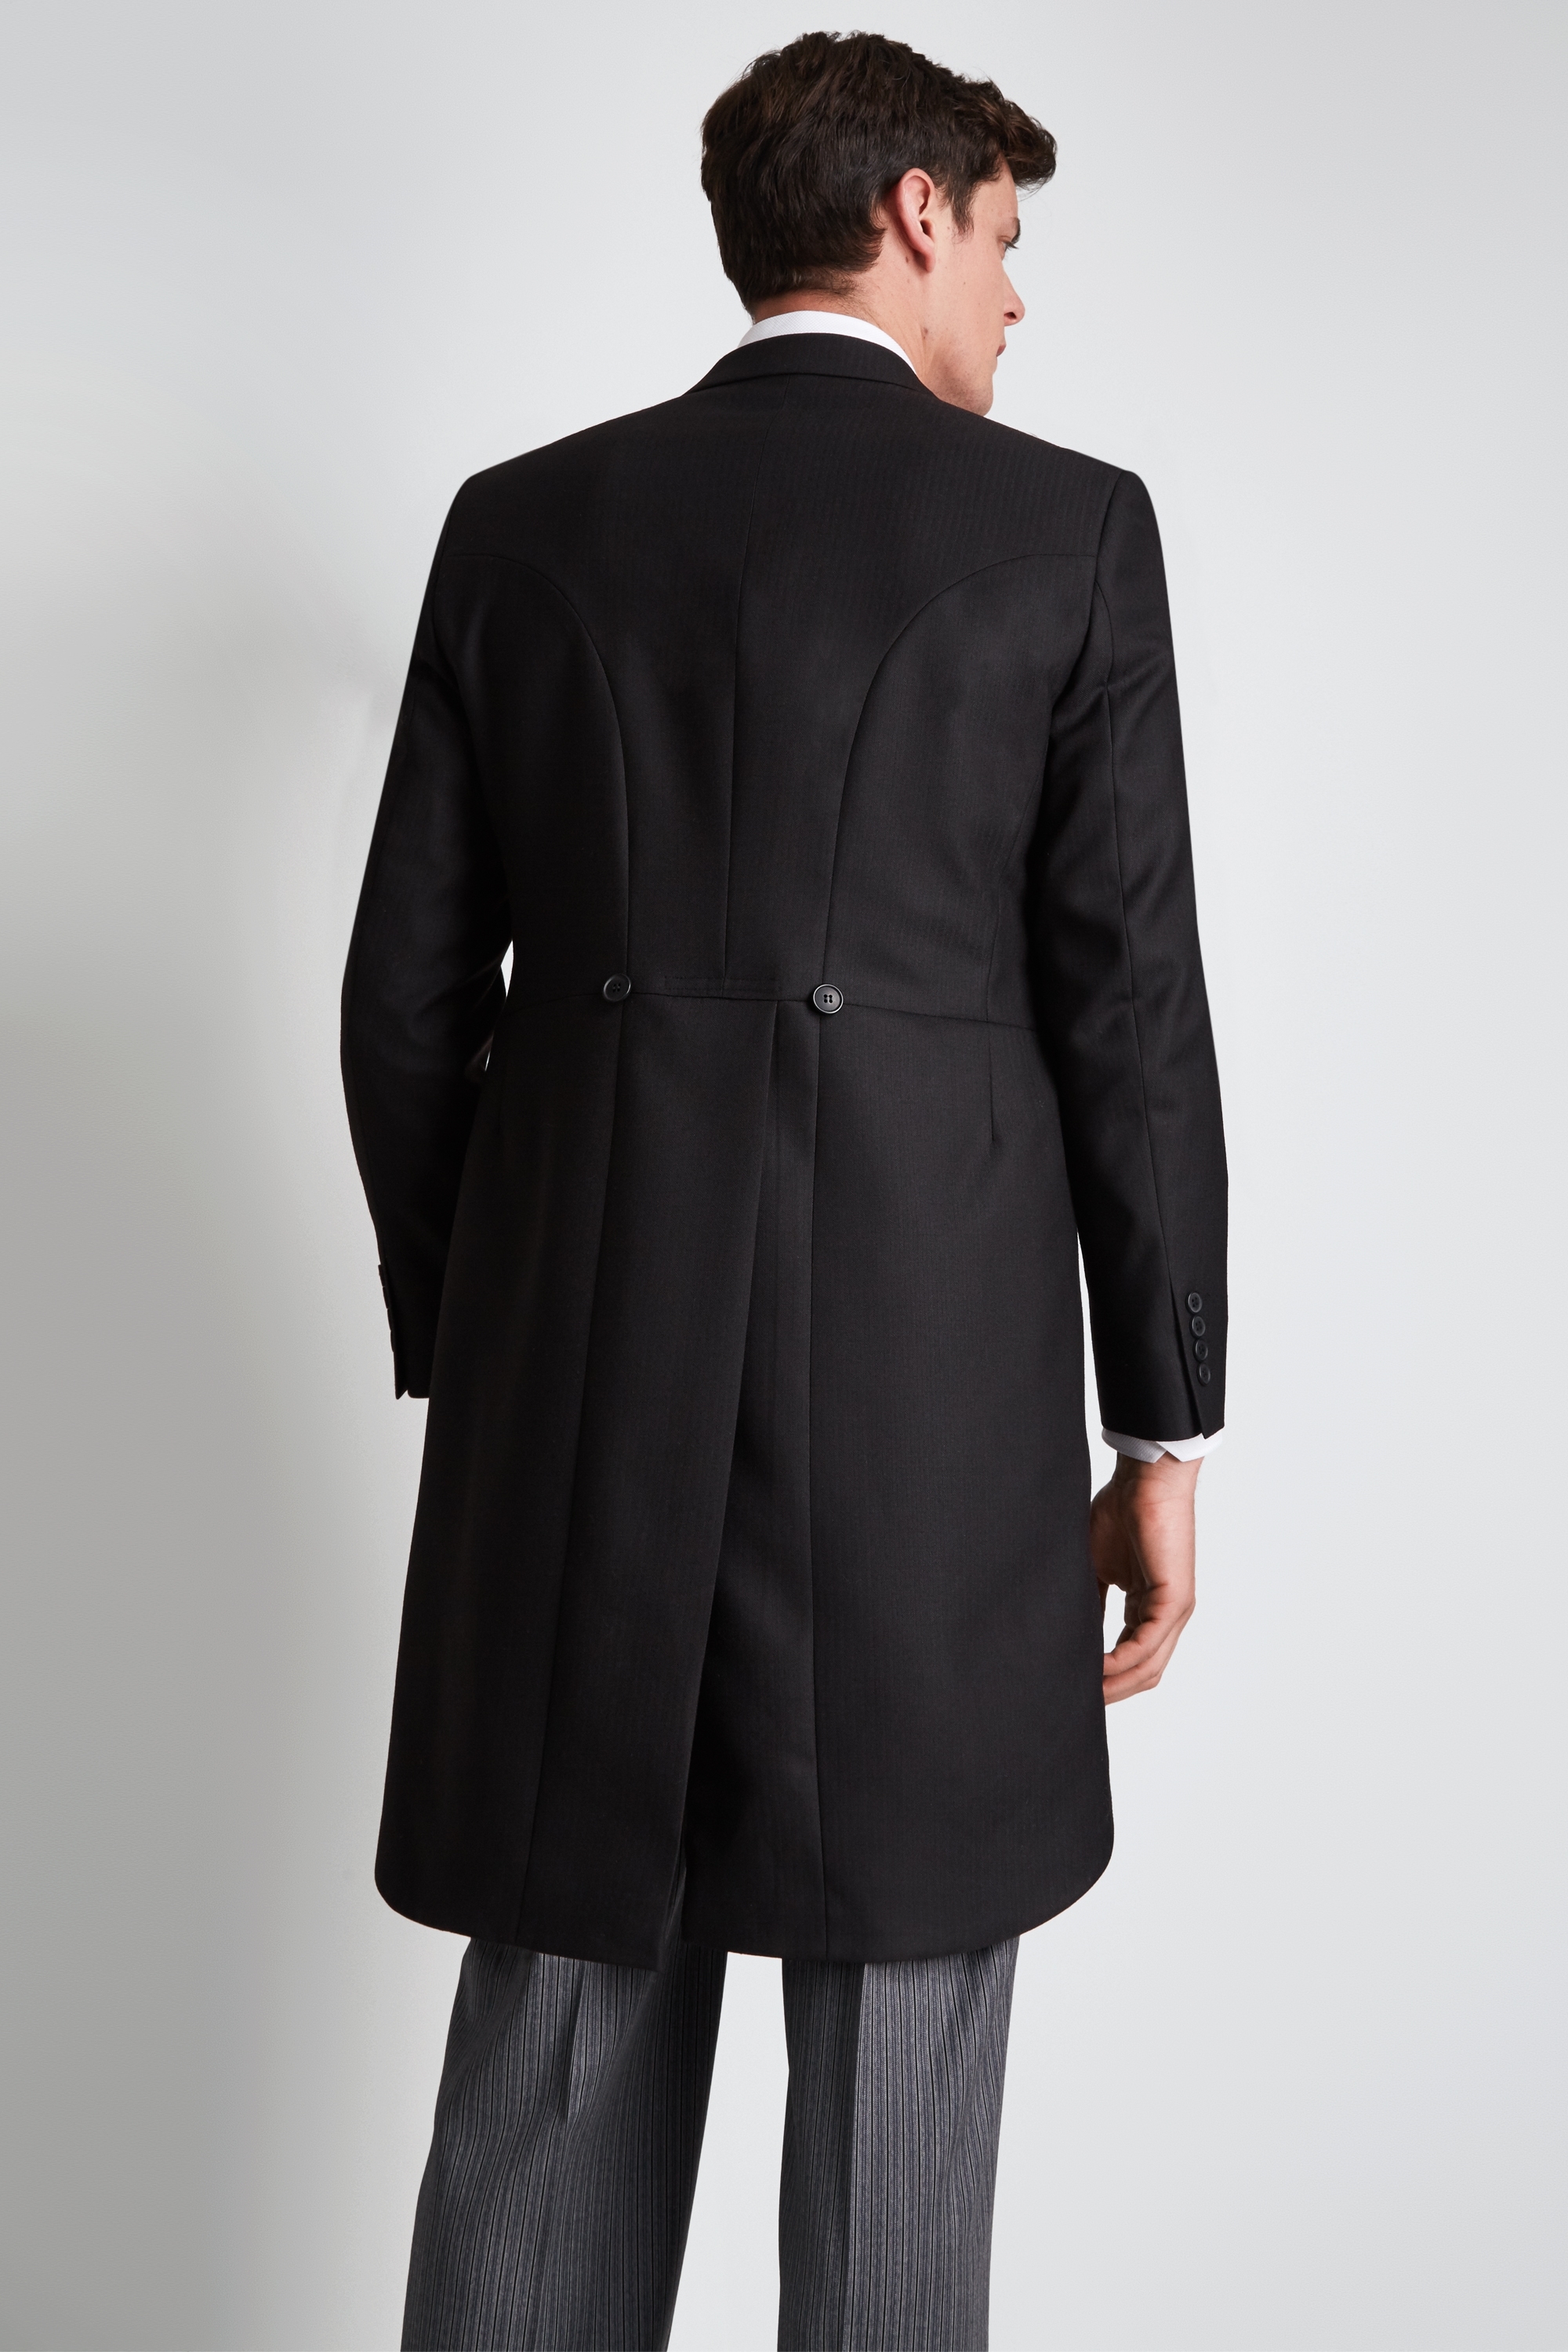 Regular Fit Black Fine Herringbone Morningwear Coat | Buy Online at Moss